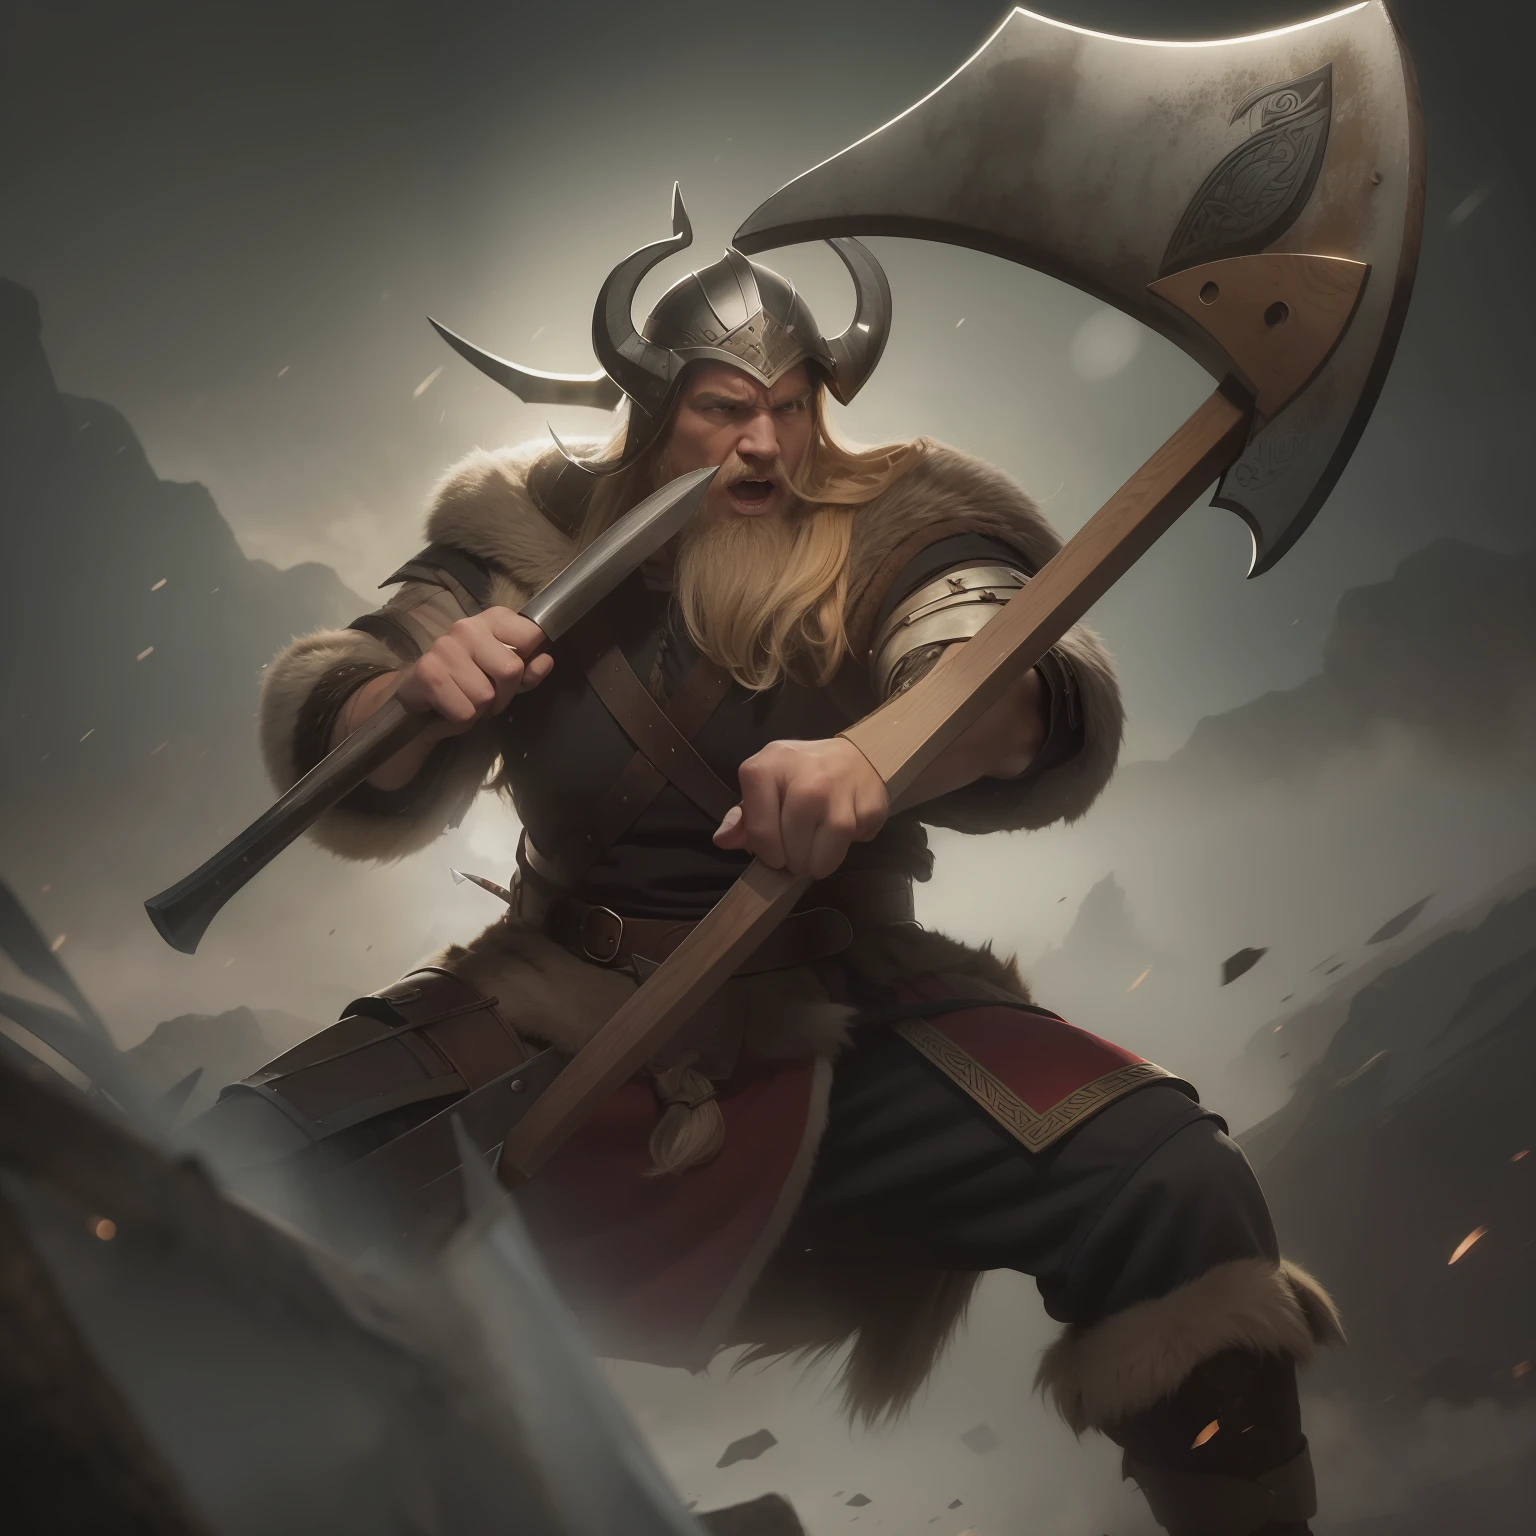 Un feroz guerrero vikingo vestido con una pesada armadura vikinga